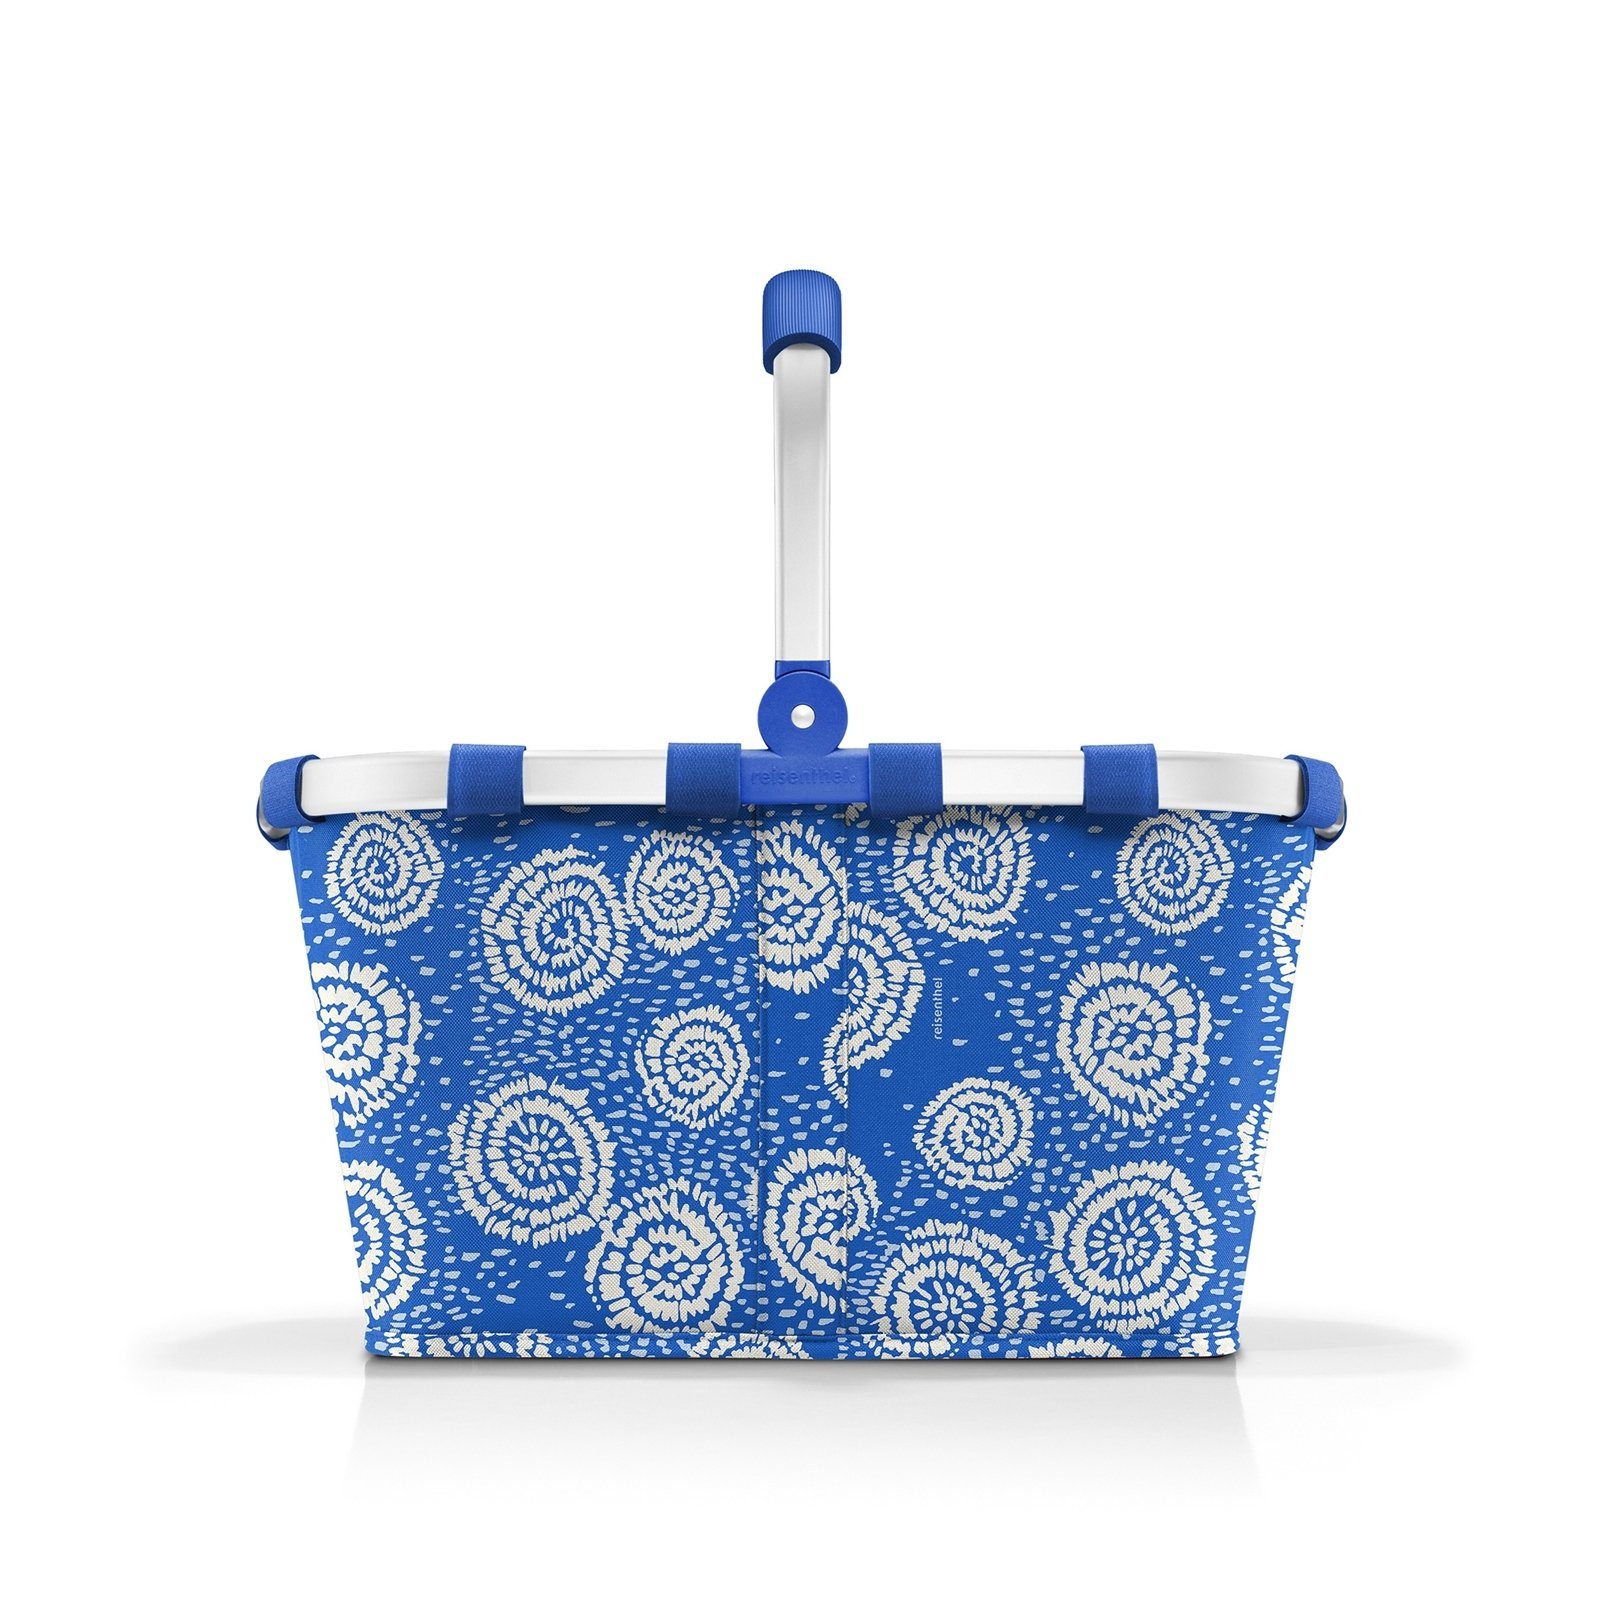 Einkaufskorb Carrybag, Einkaufskorb strong batik l 22 Shopping, blue REISENTHEL®